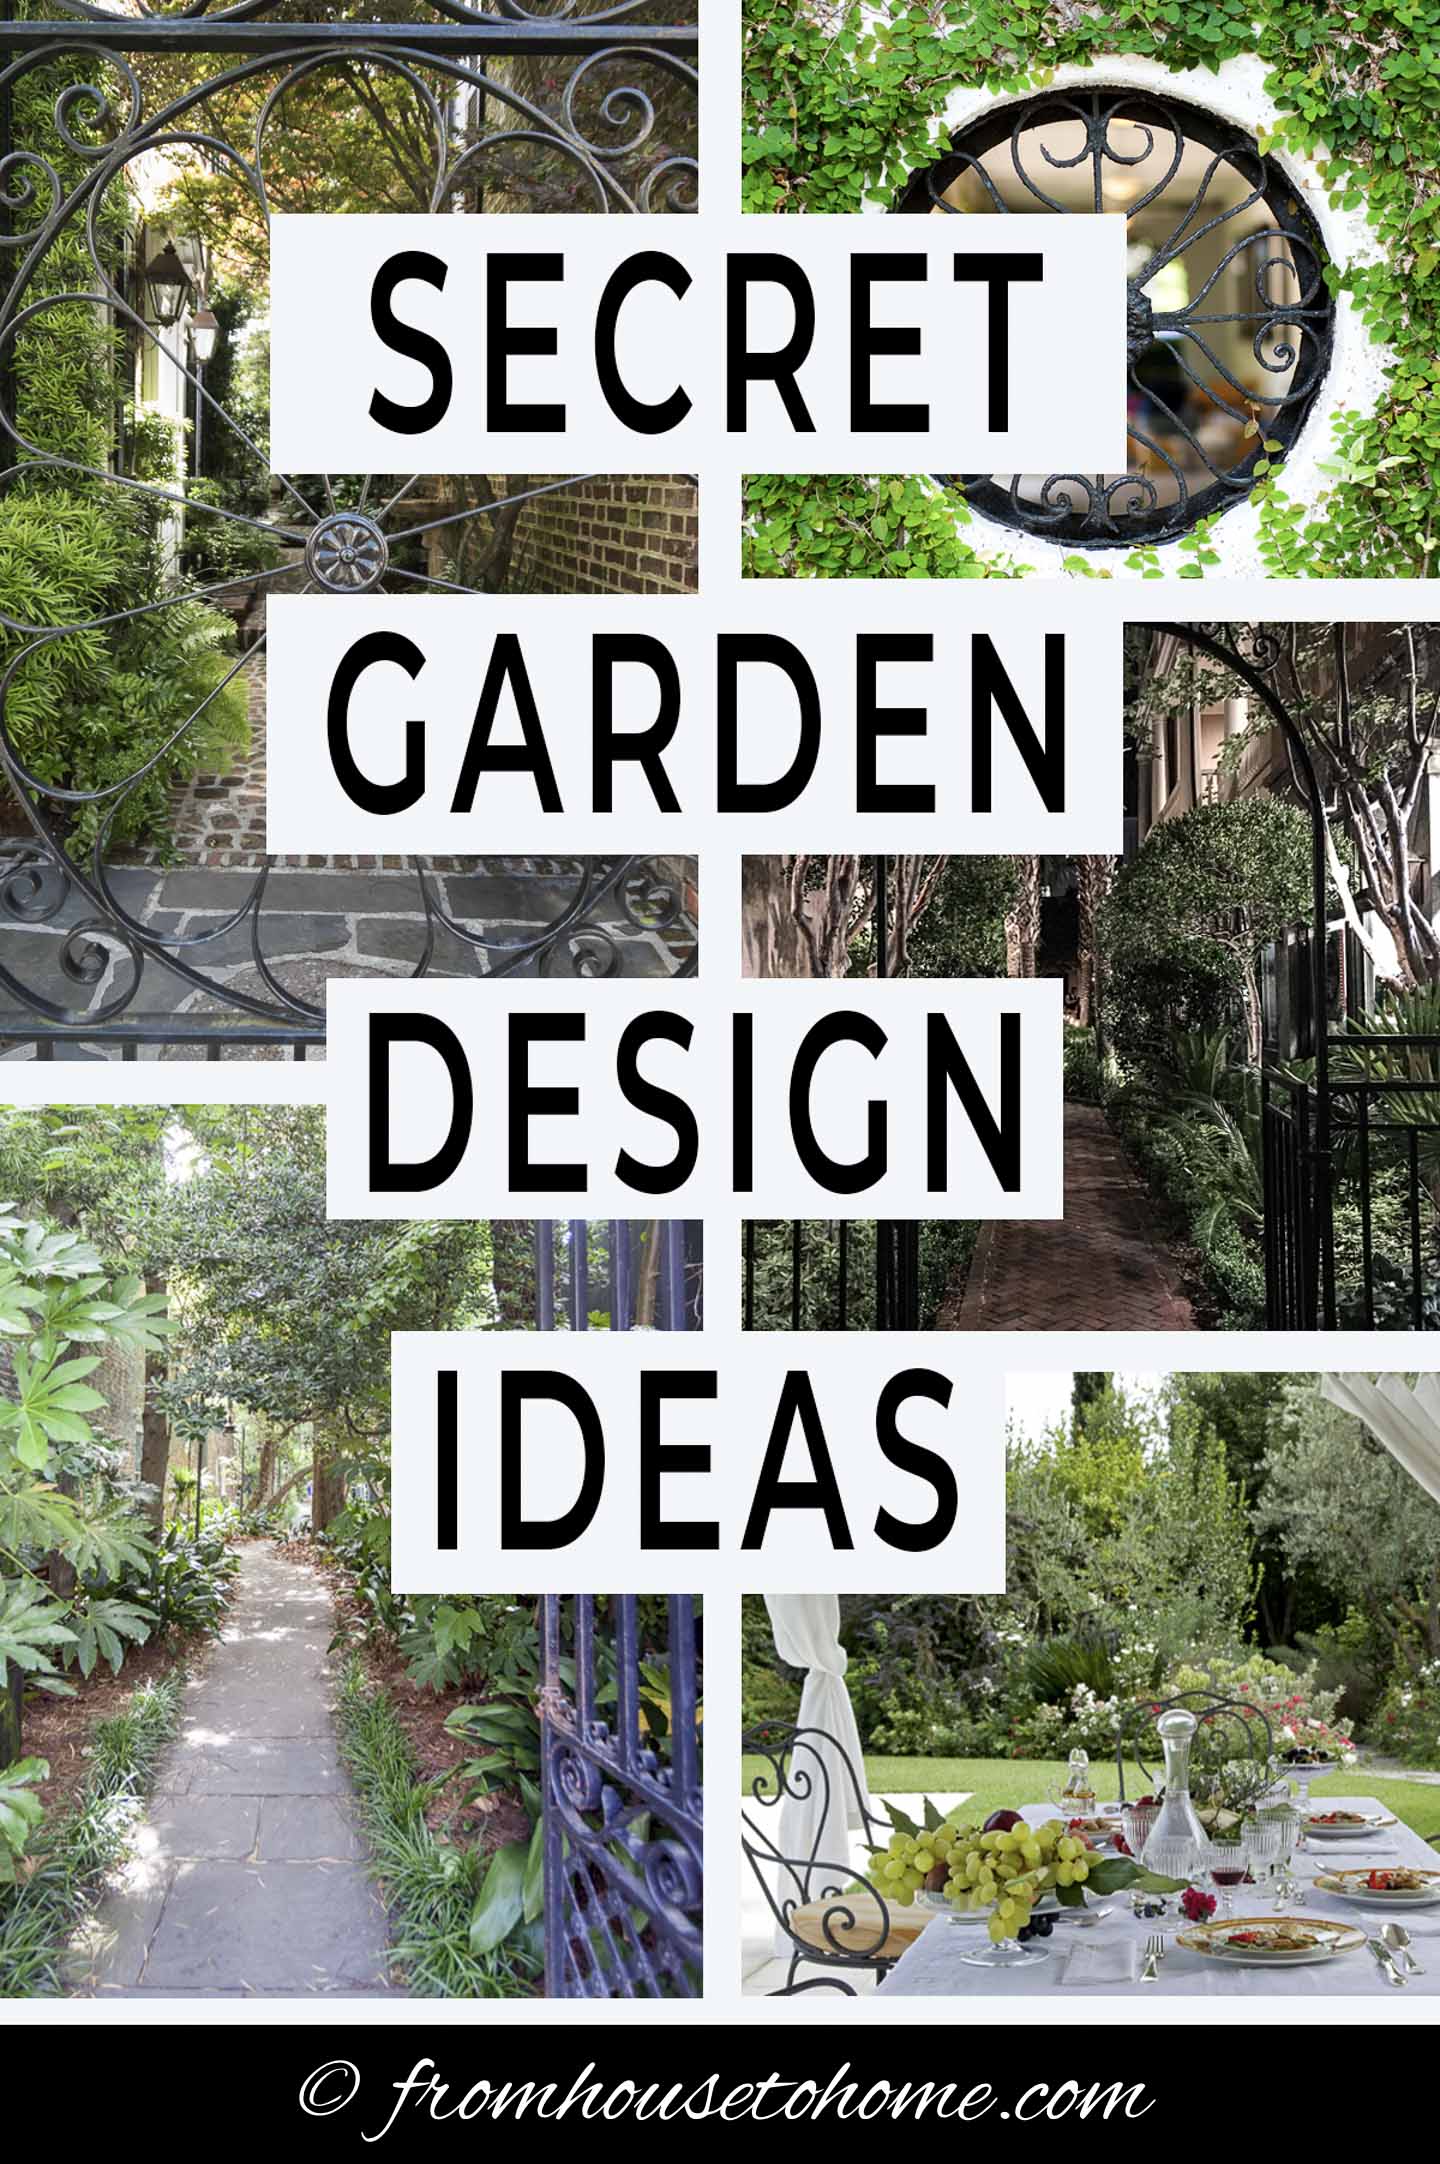 Secret garden ideas